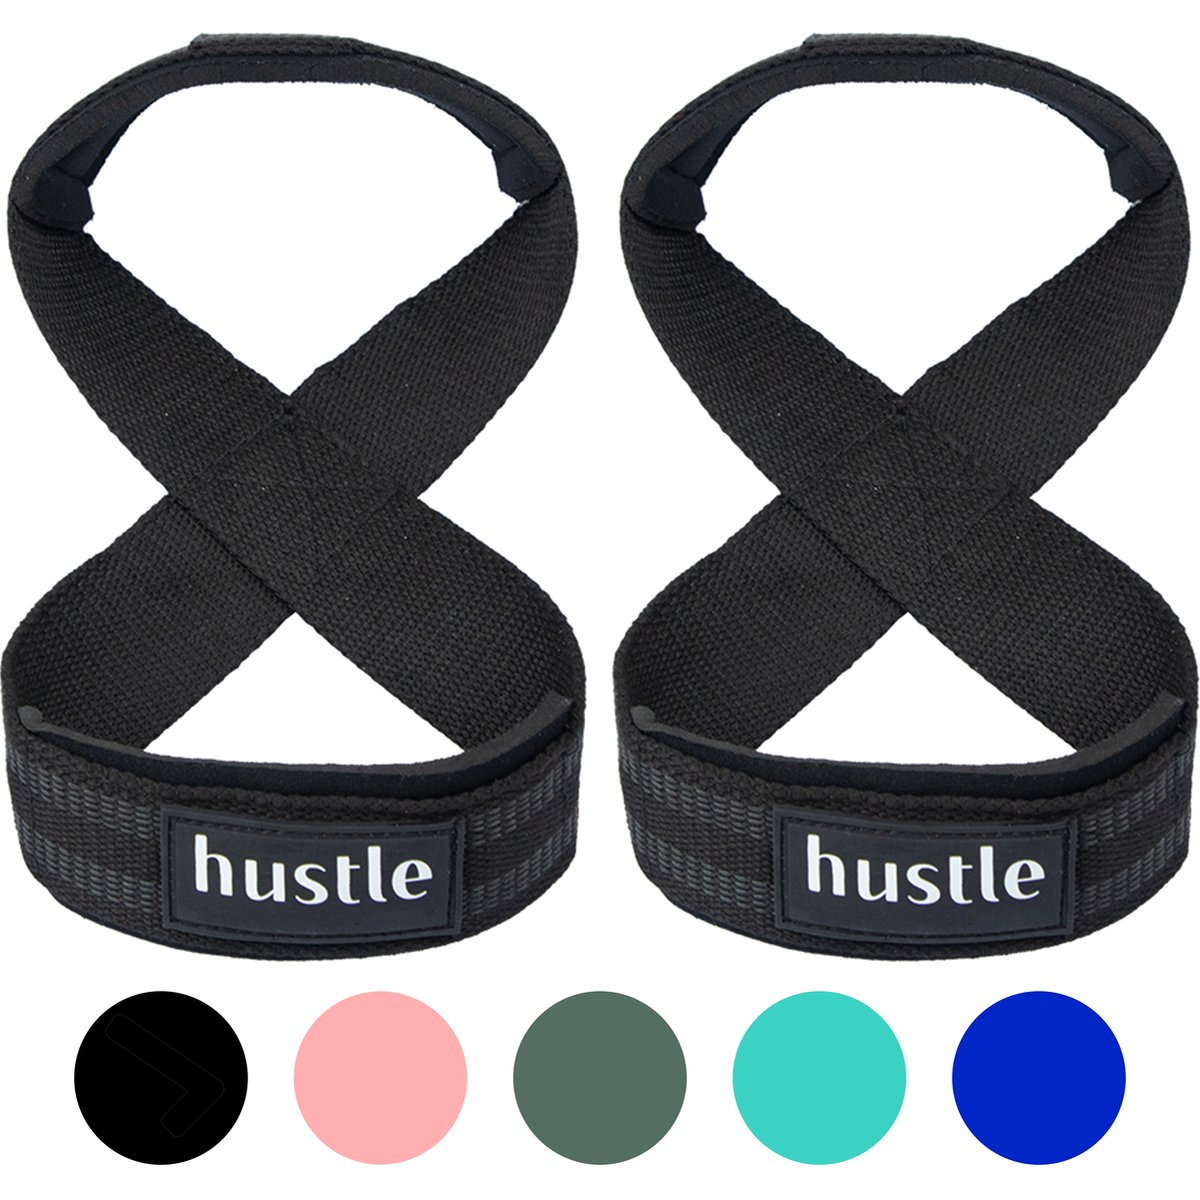 hustle - Zwarte/Grijze Figure 8 Straps - met Padding - Padded - Lifting Grips/Hooks/Straps - Maat L - 1 Paar